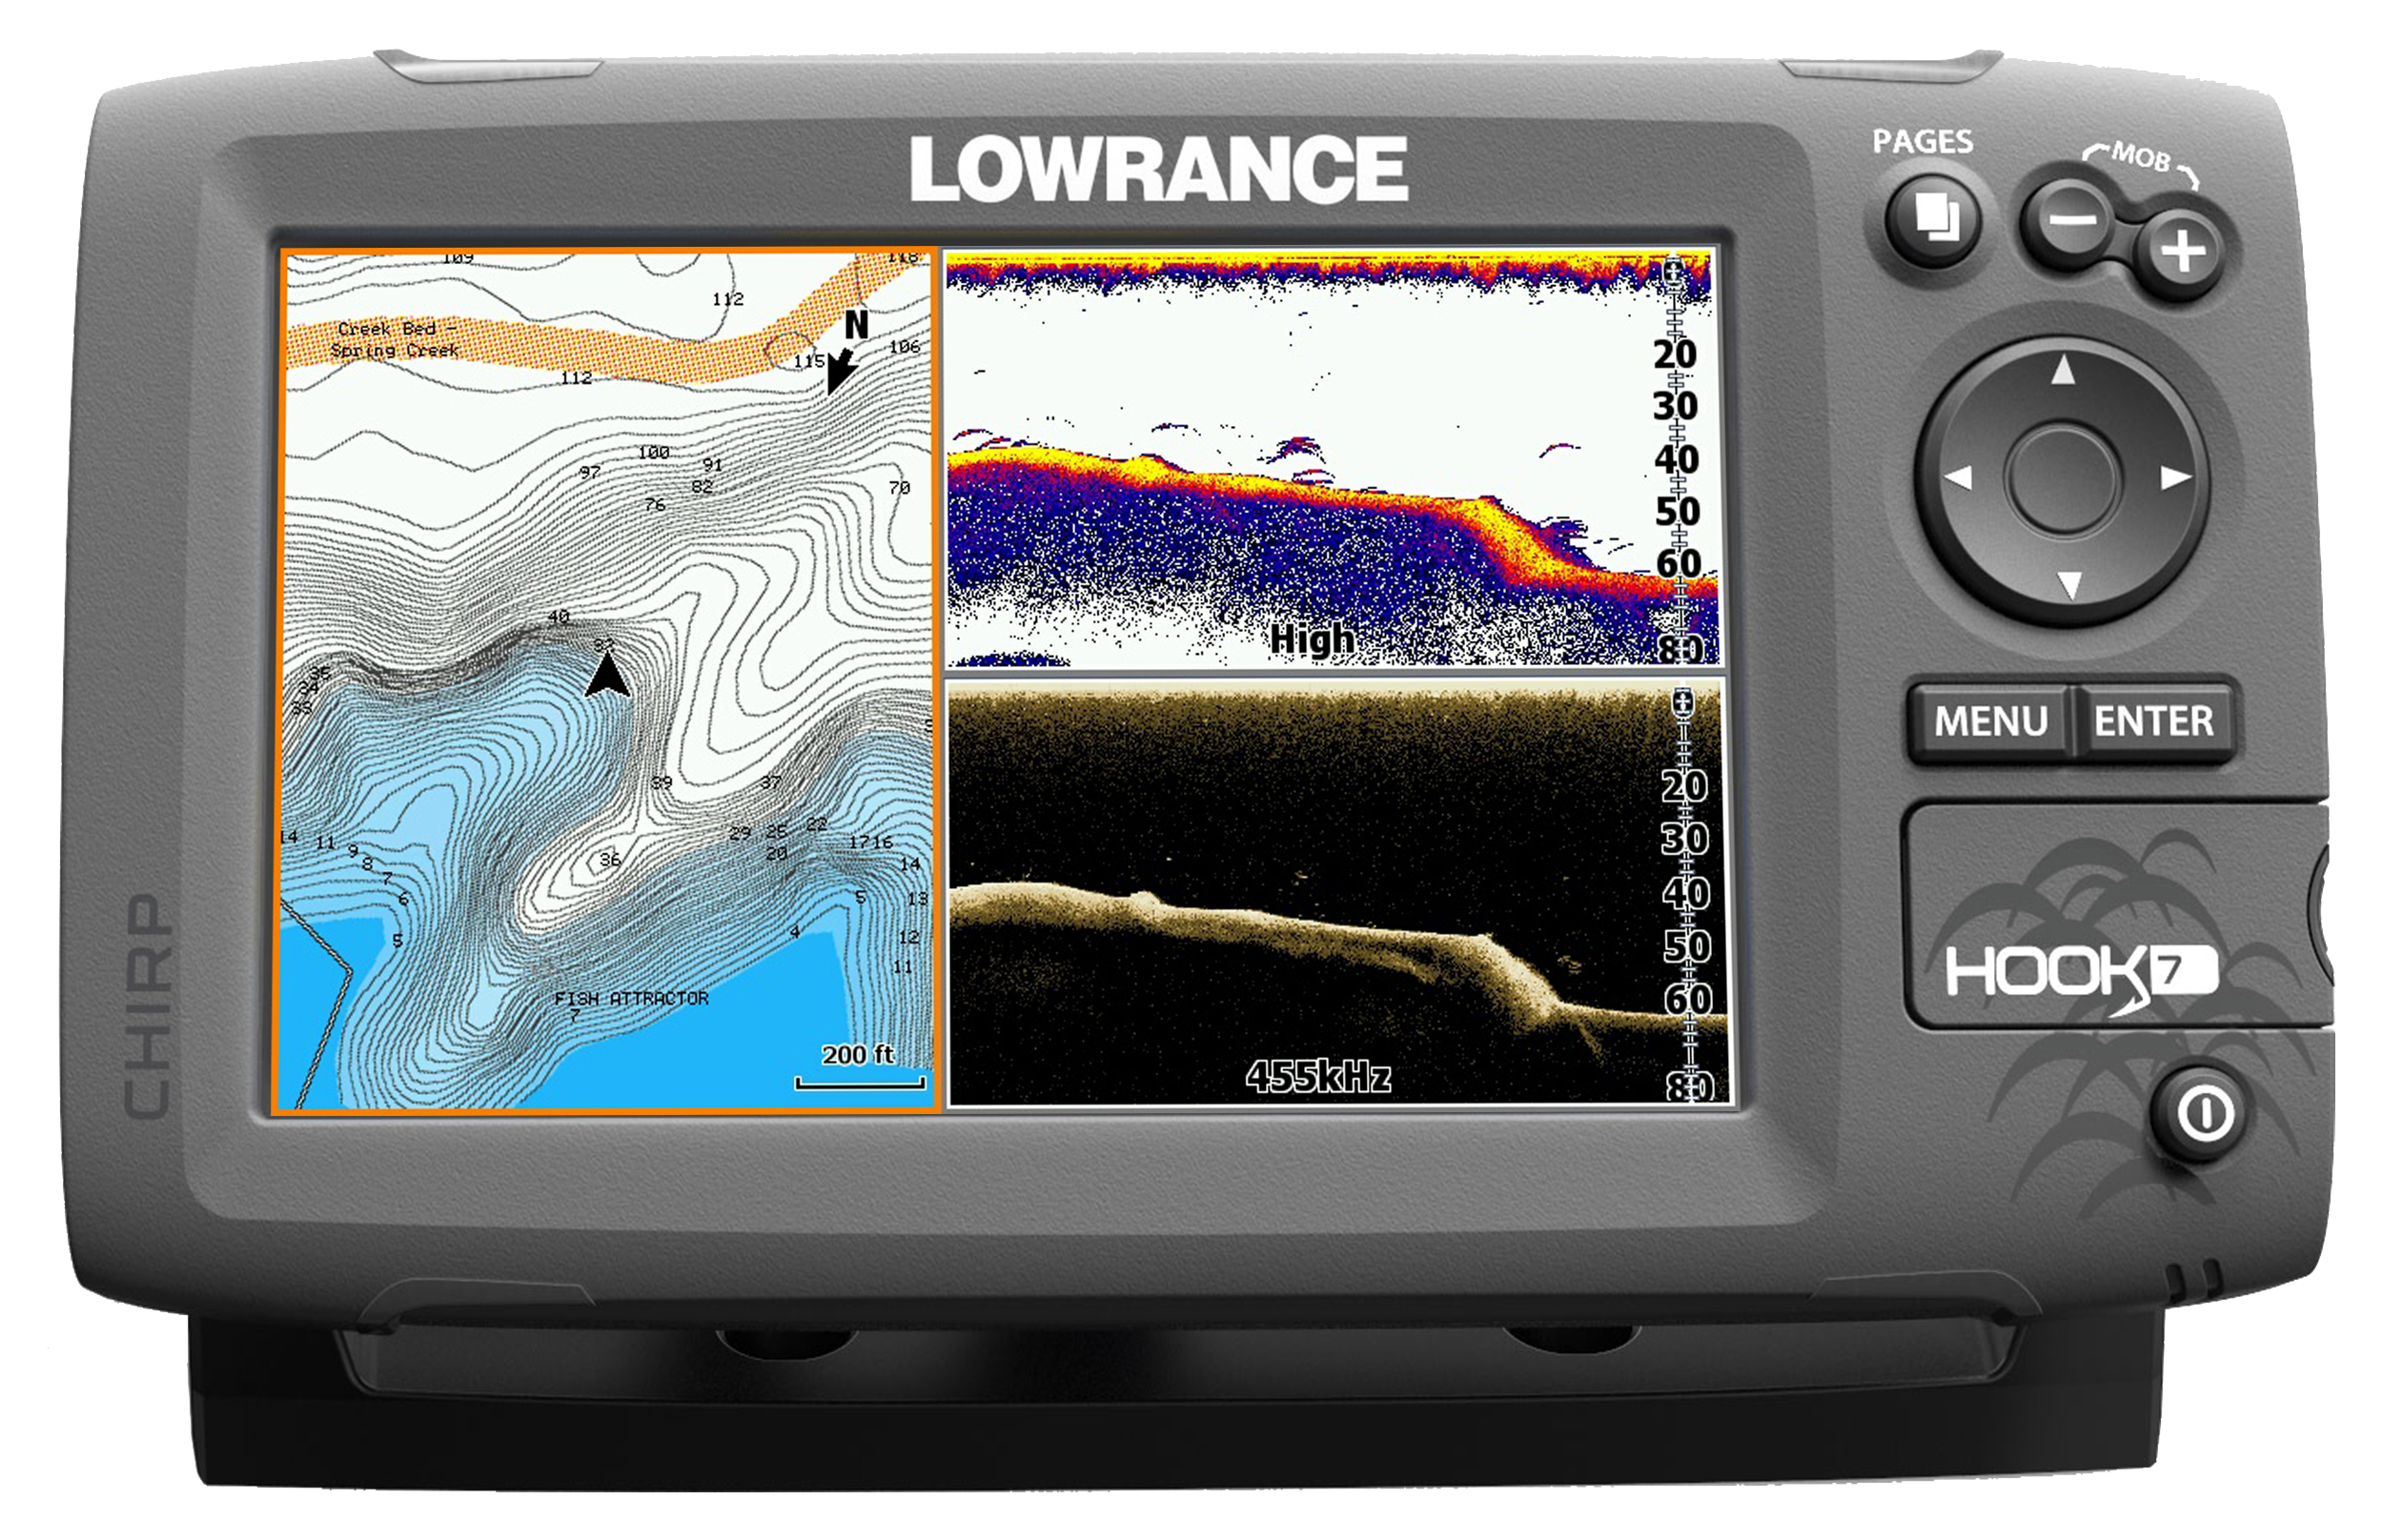 Lowrance Hook-7 Fishfinder/Chartplotter with Navionics+